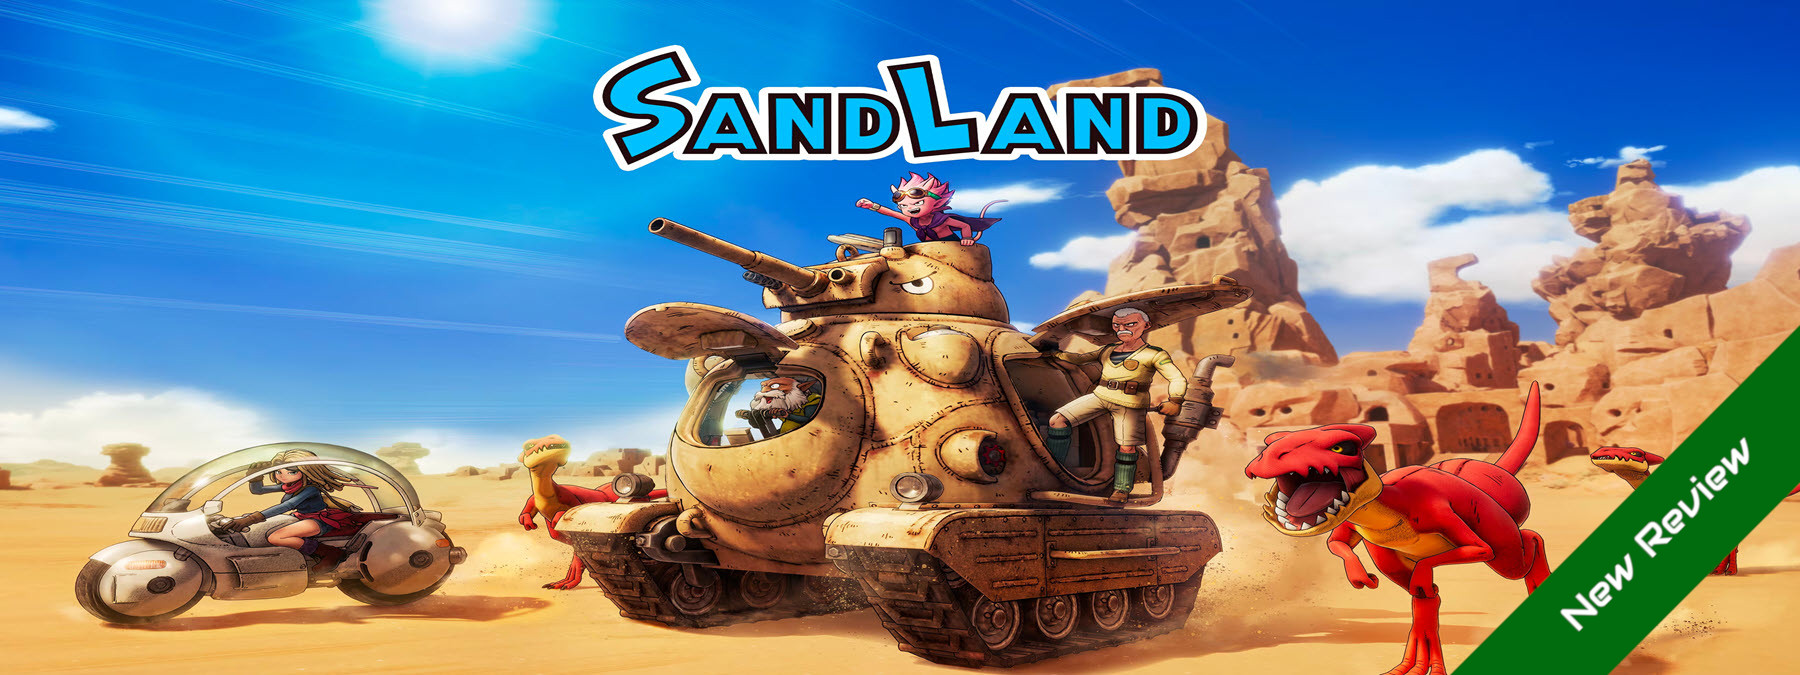 sand-land-carousel-1